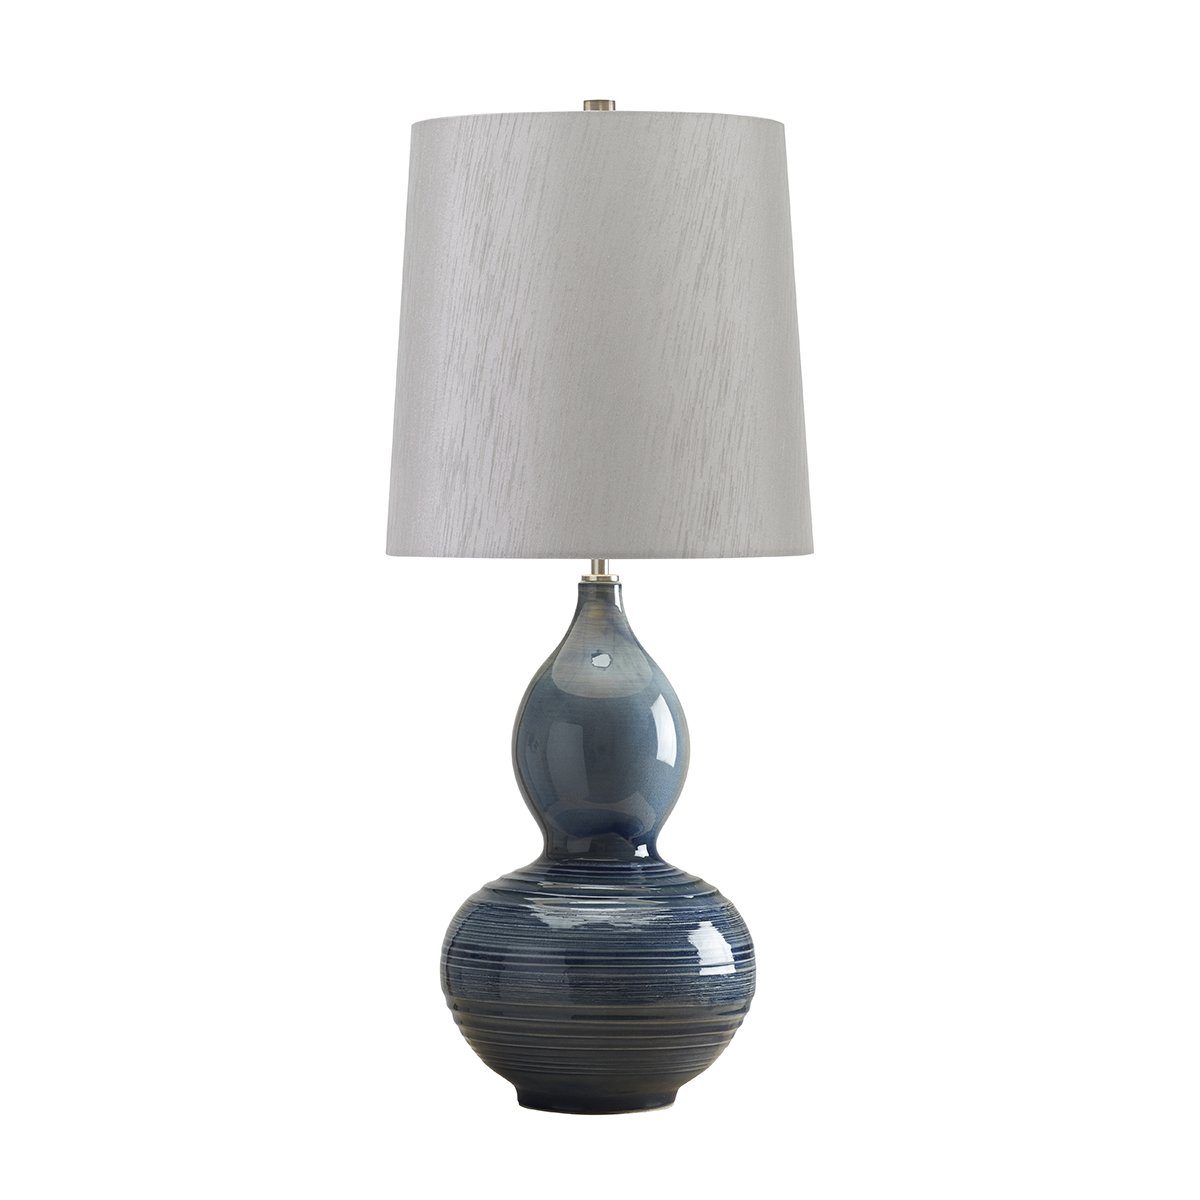 Locksbottom Ridged Table Lamp c/w Shade - ID 8377